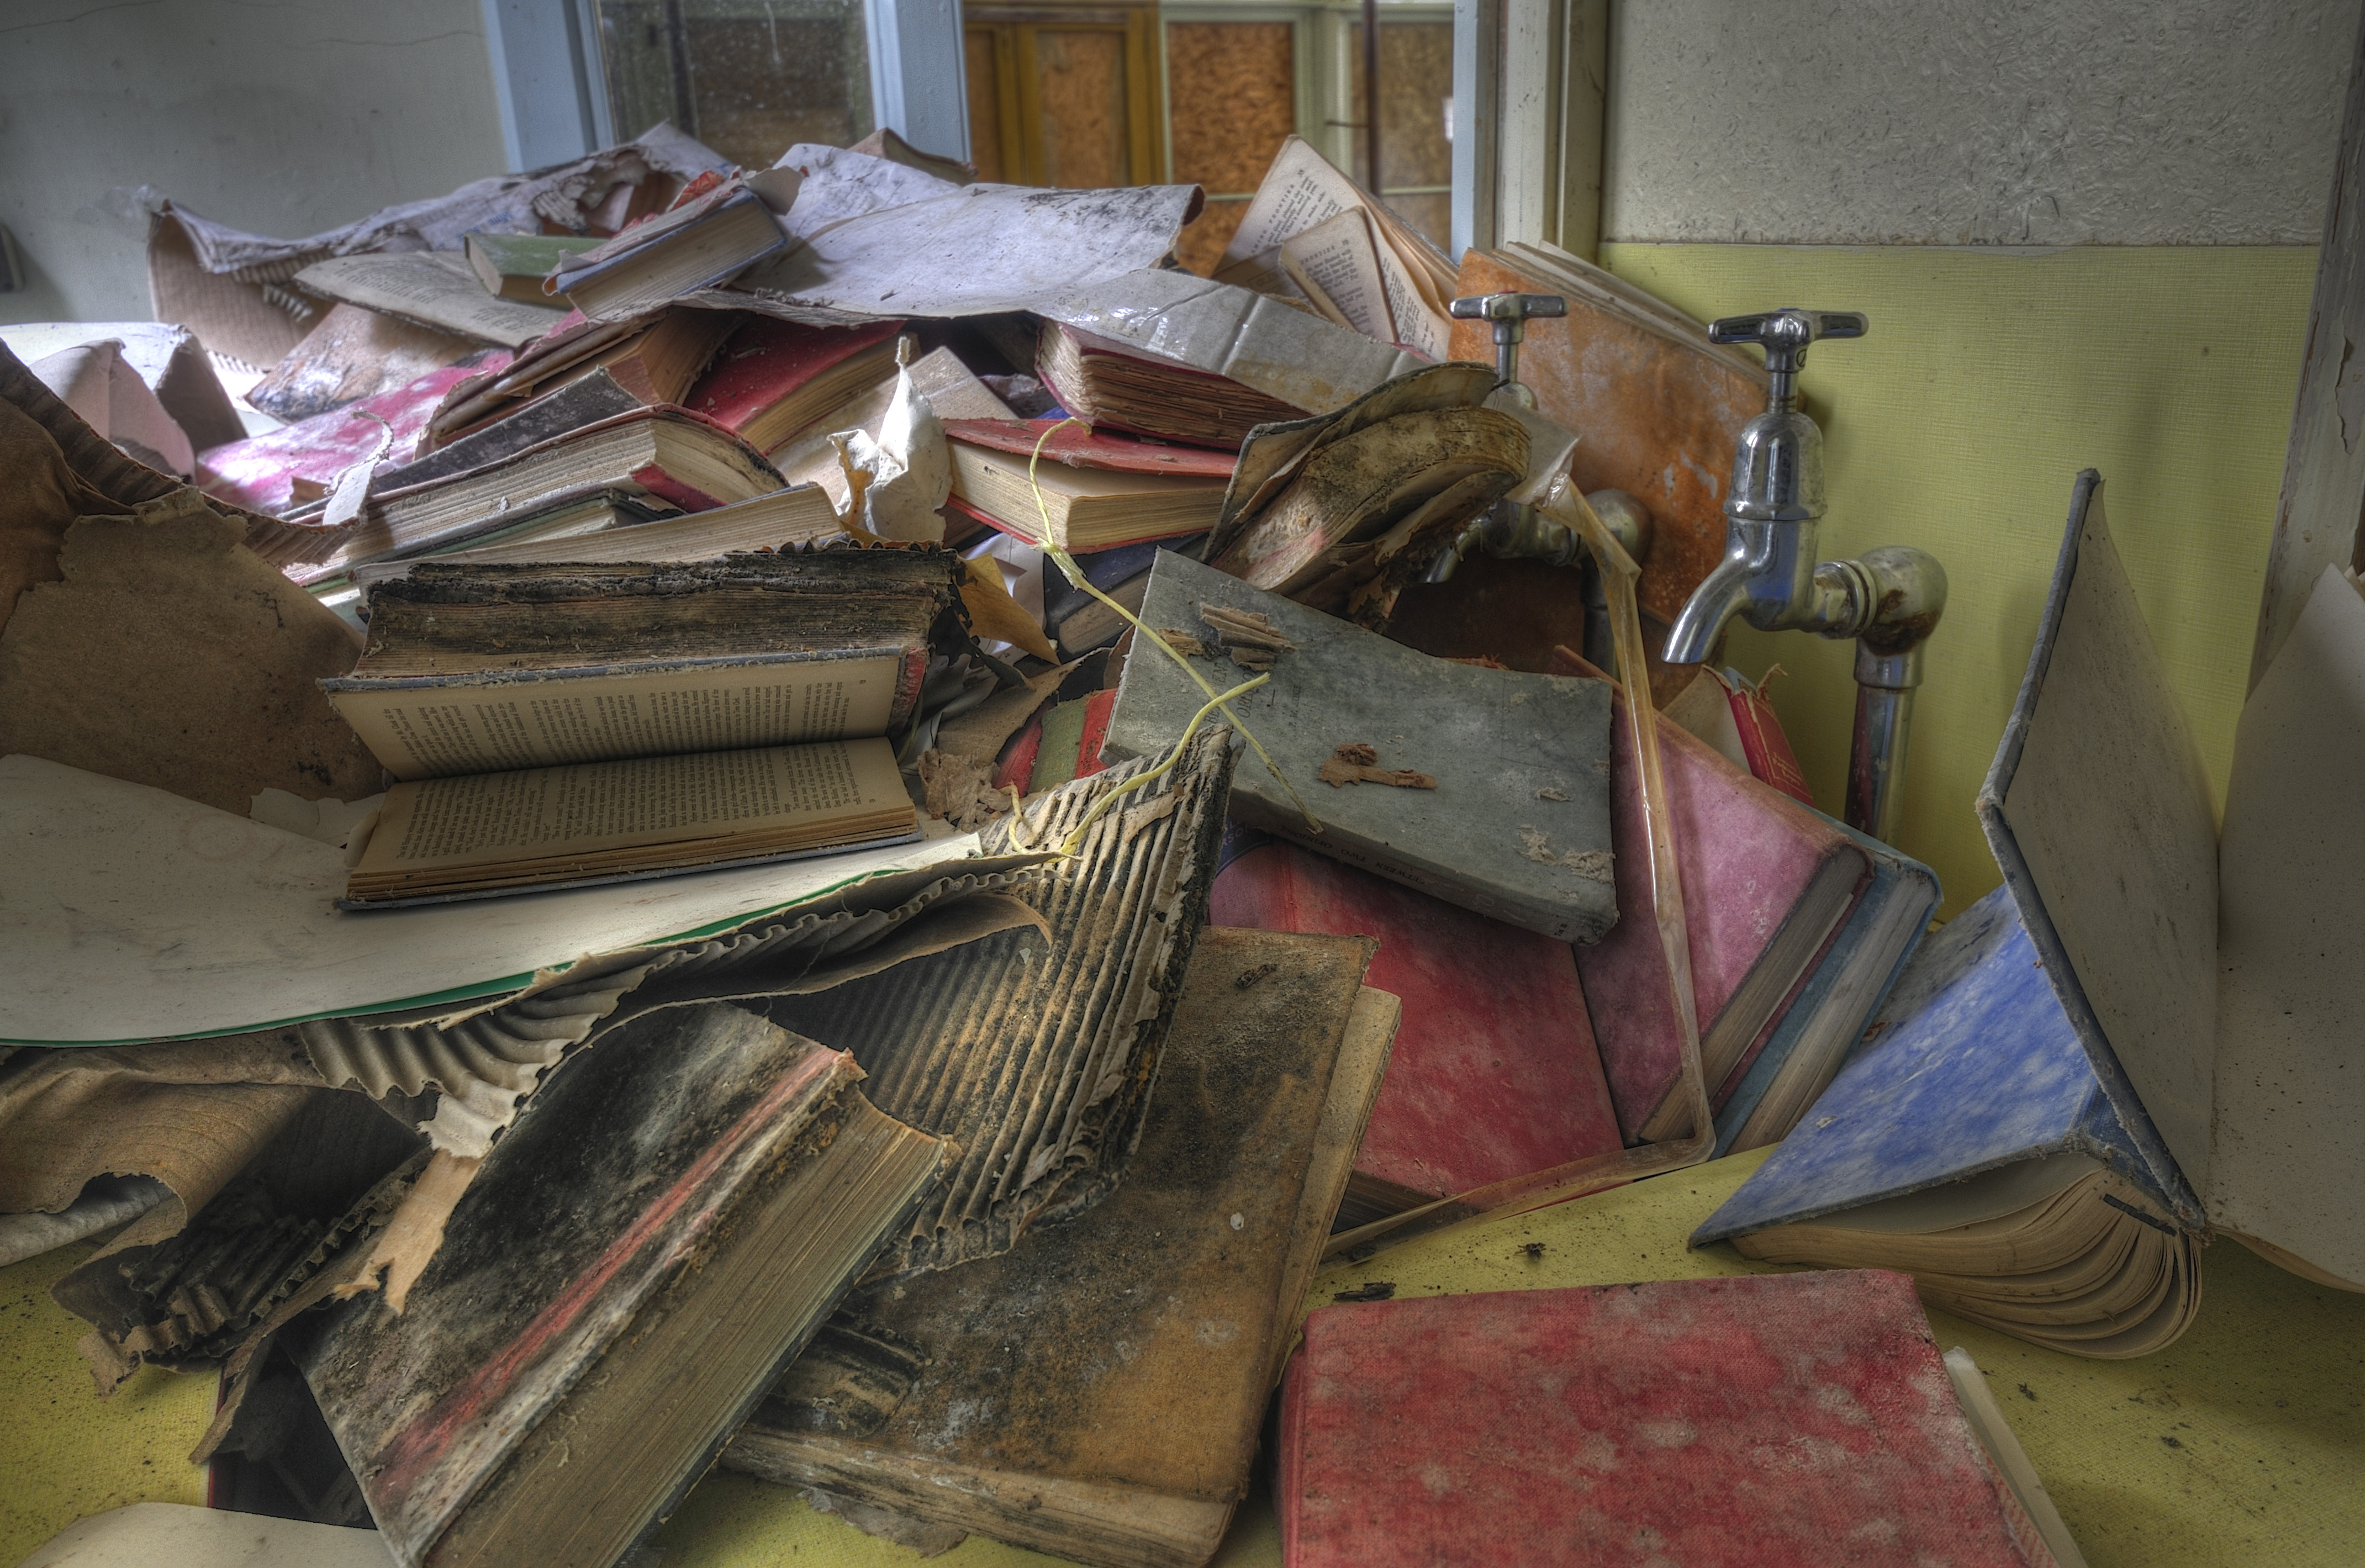 destroyed, books - desktop wallpaper